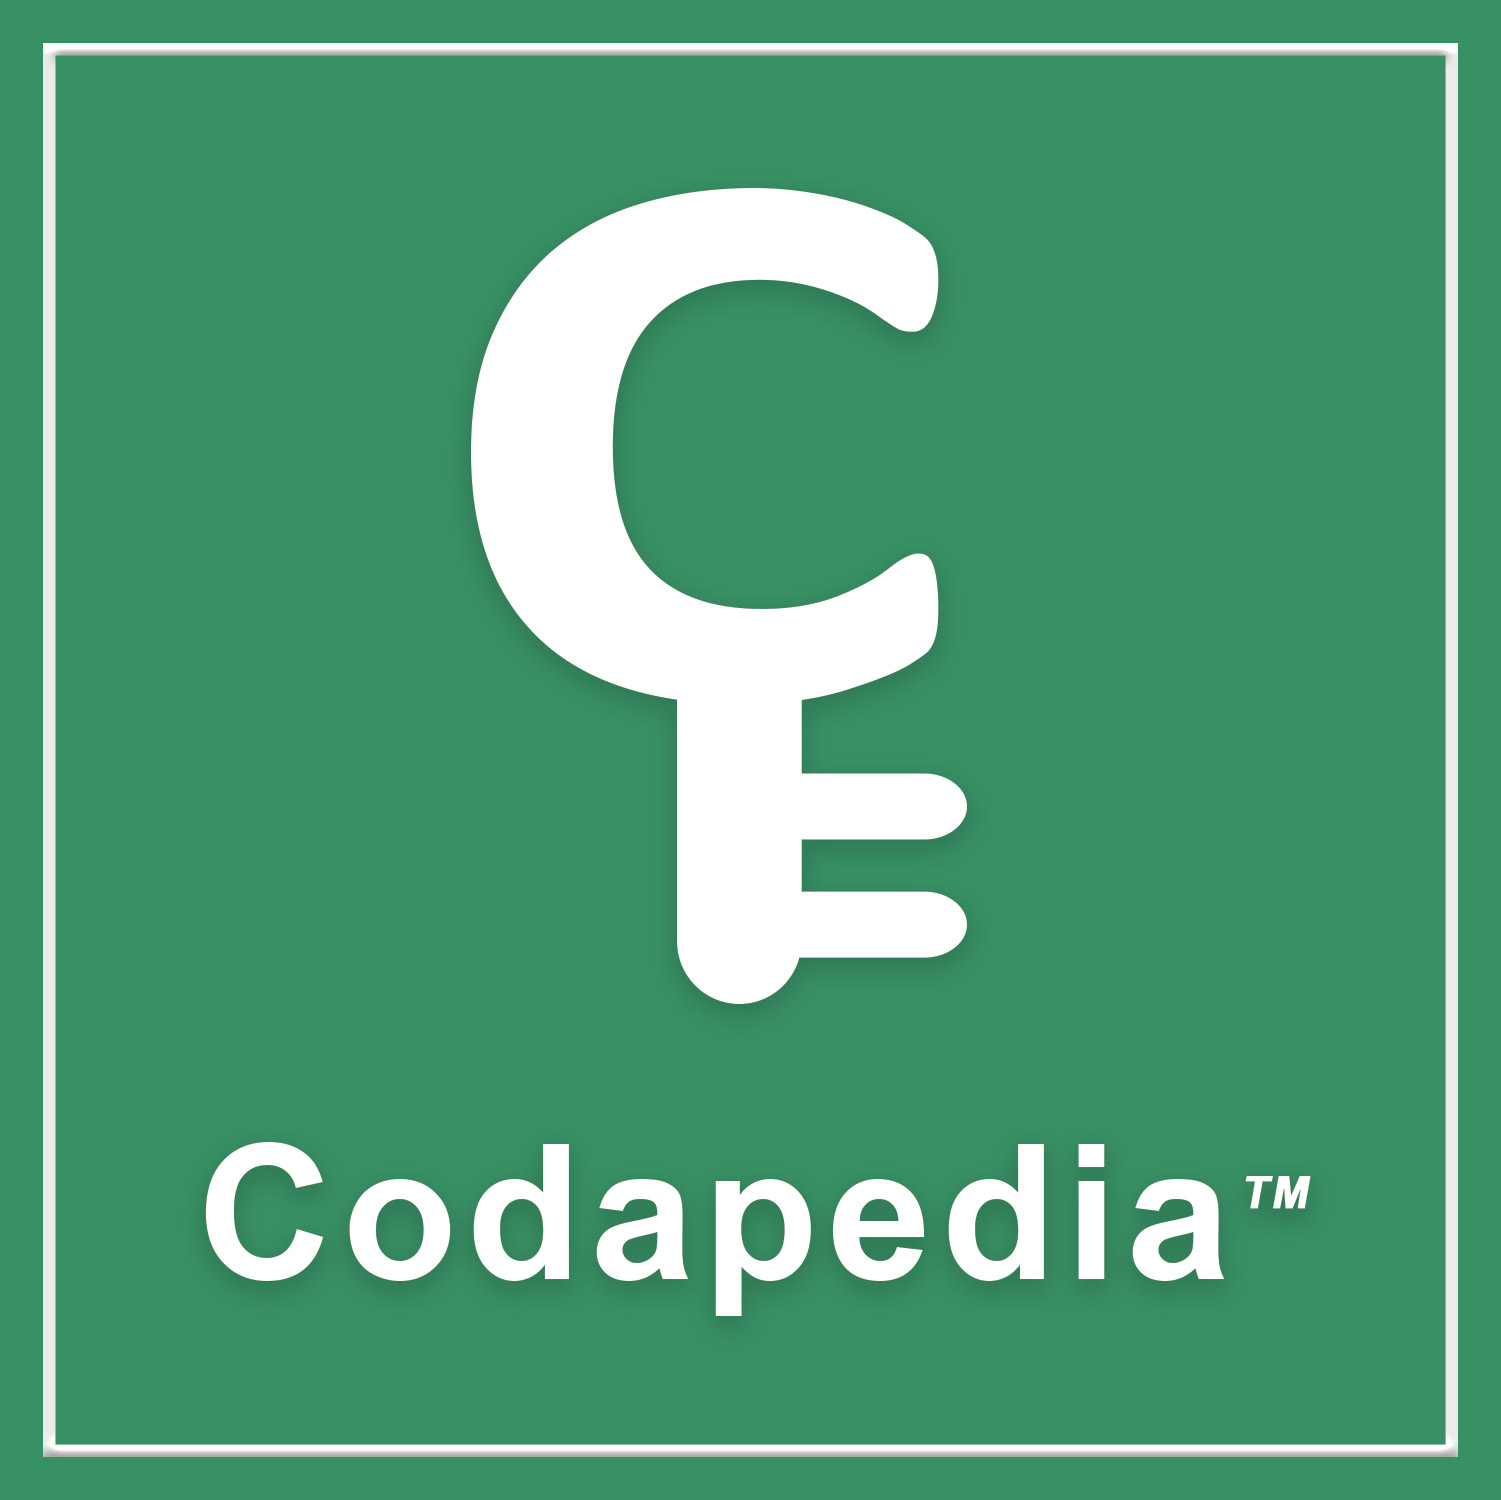 Codapedia.com logo - medical coding and billing articles and information